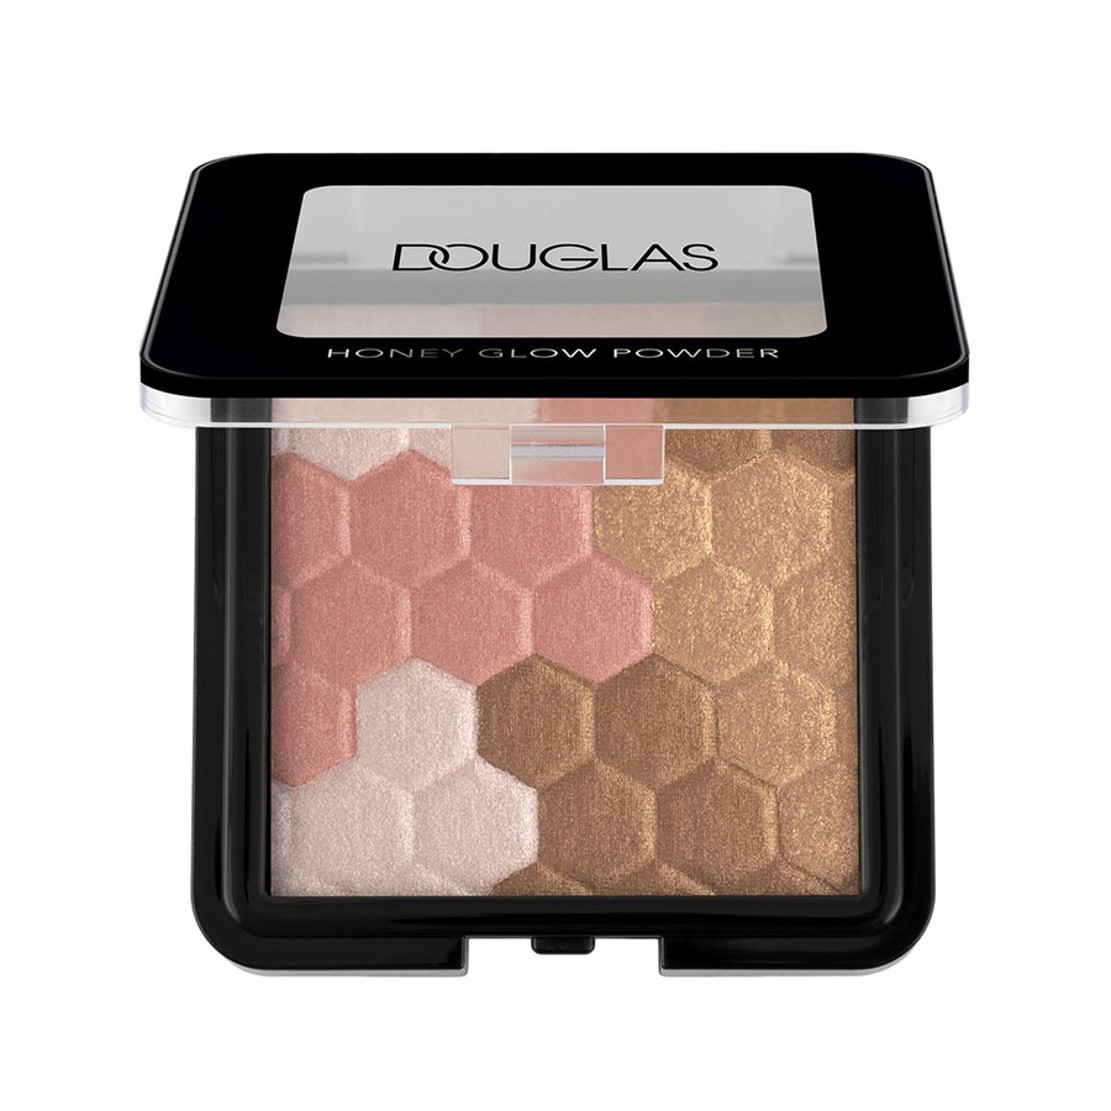 Douglas Collection - Honey Glow Powder Face Shimmering Powder - 